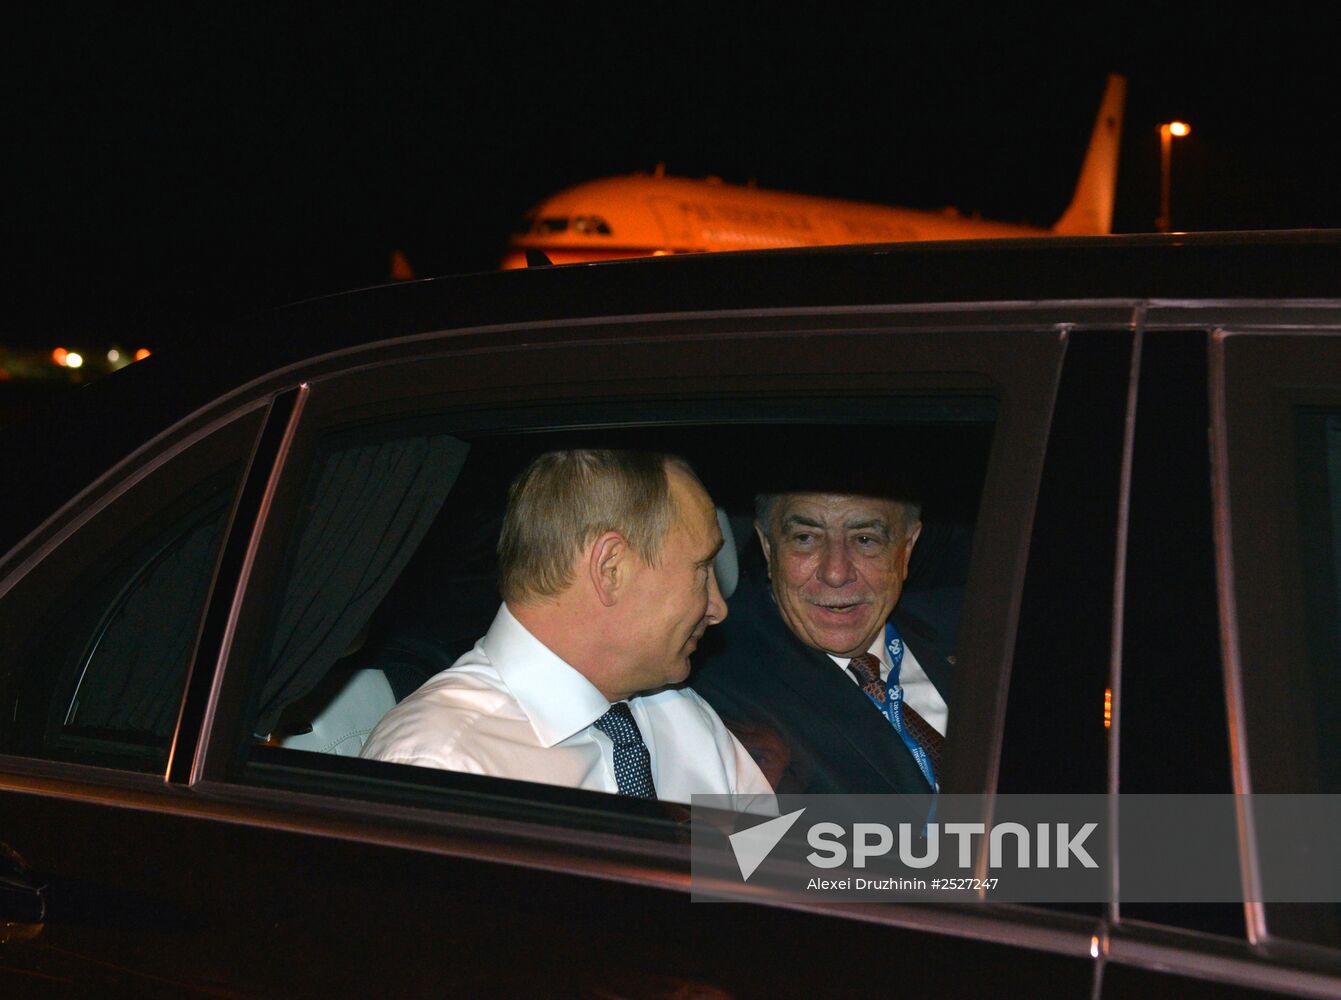 Vladimir Putin arrives in Australia for G20 Leaders Summit